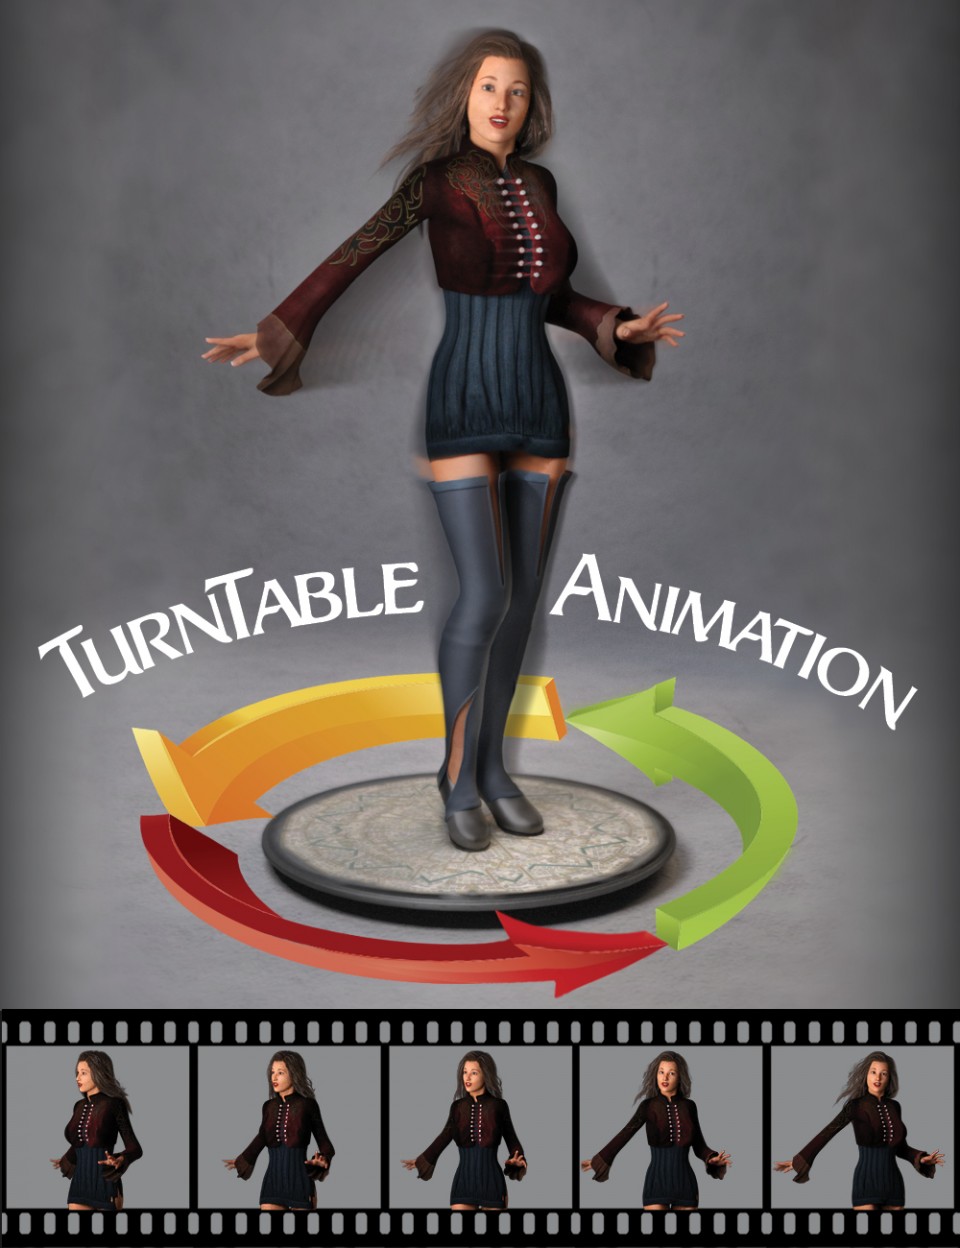 360 Rotating Turntable Animations